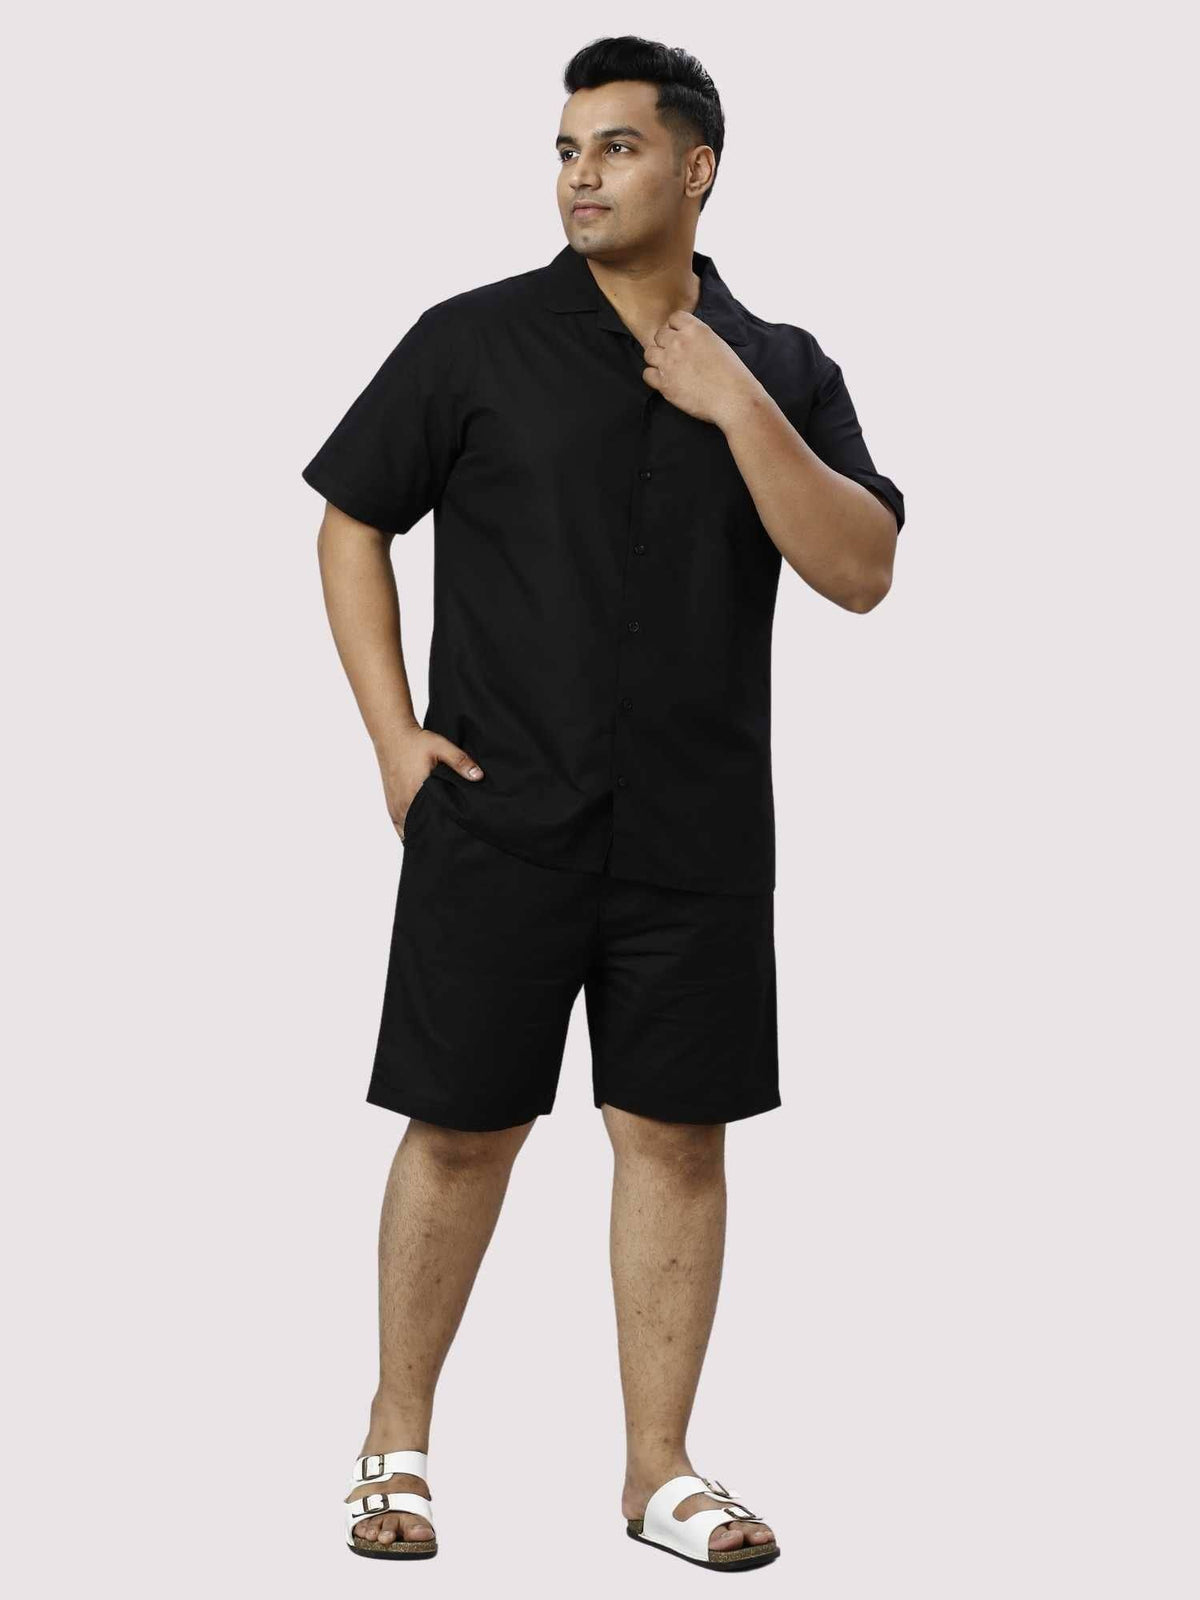 Nero Solid Black Half Co-ords Set Men's Plus Size - Guniaa Fashions